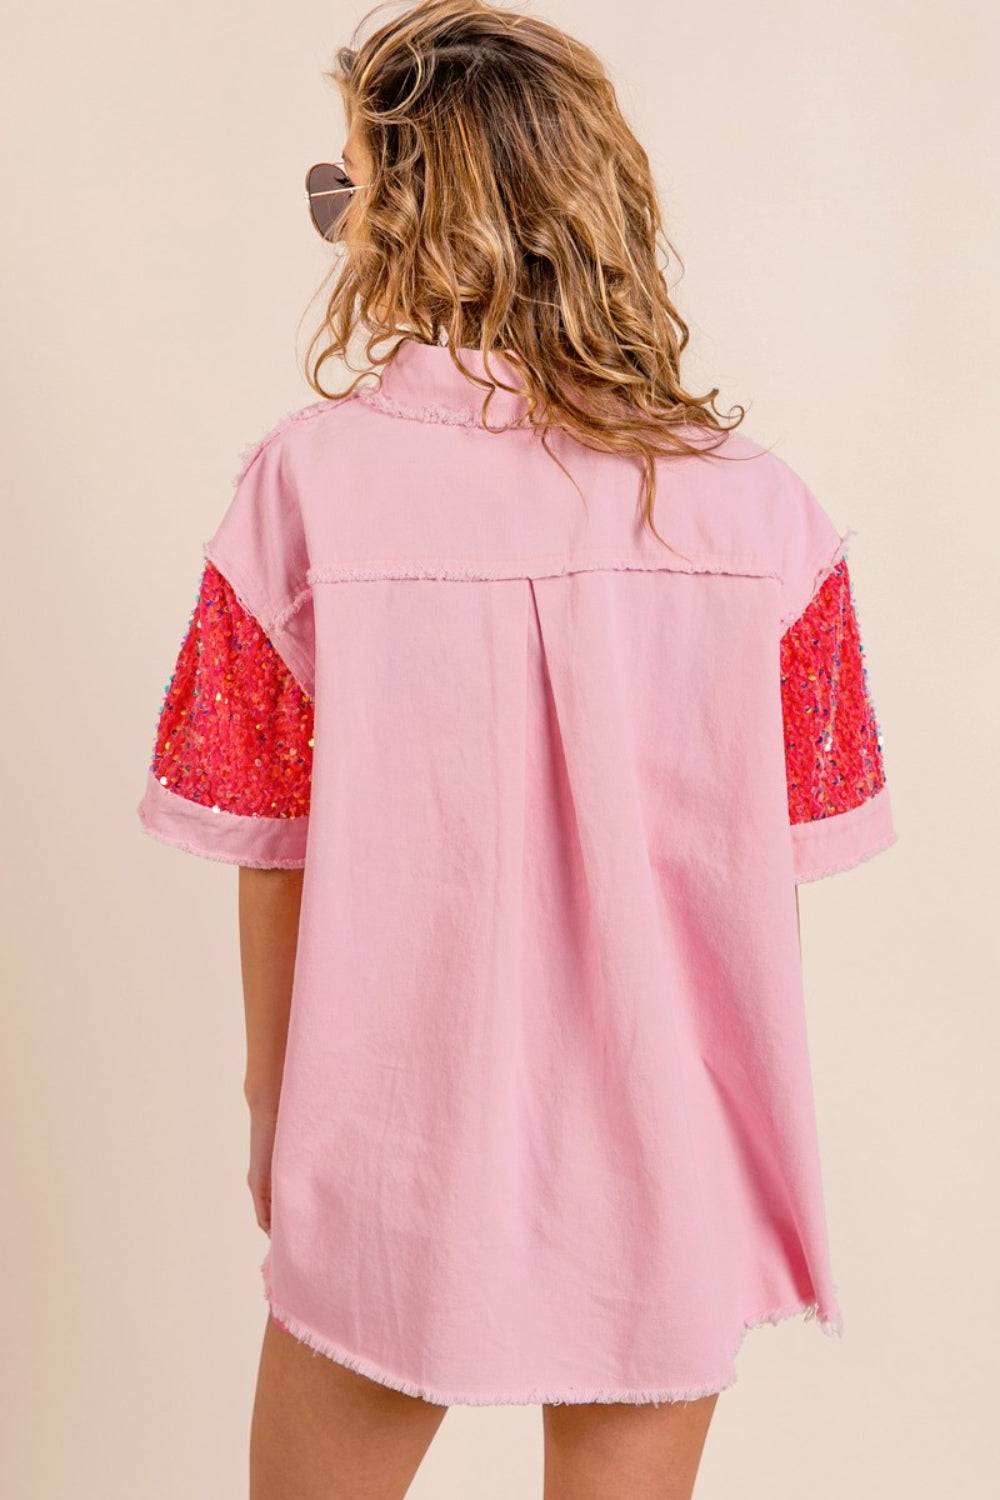 BiBi Sequin Detail Raw Hem Short Sleeve Shirt - Tigbuls Variety Fashion